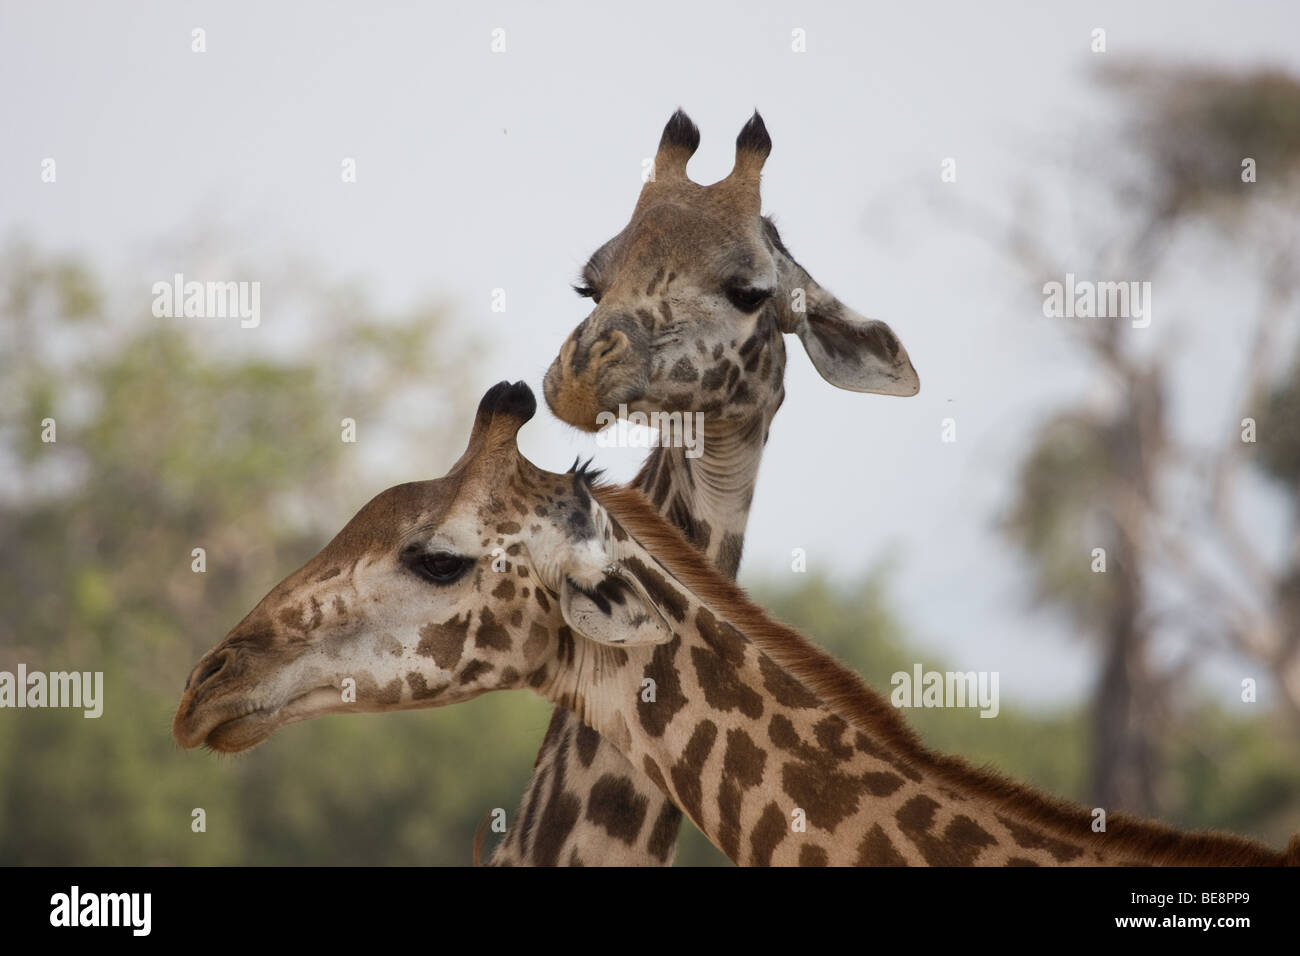 2 Giraffes with their necks crossed posing looking around Stock Photo